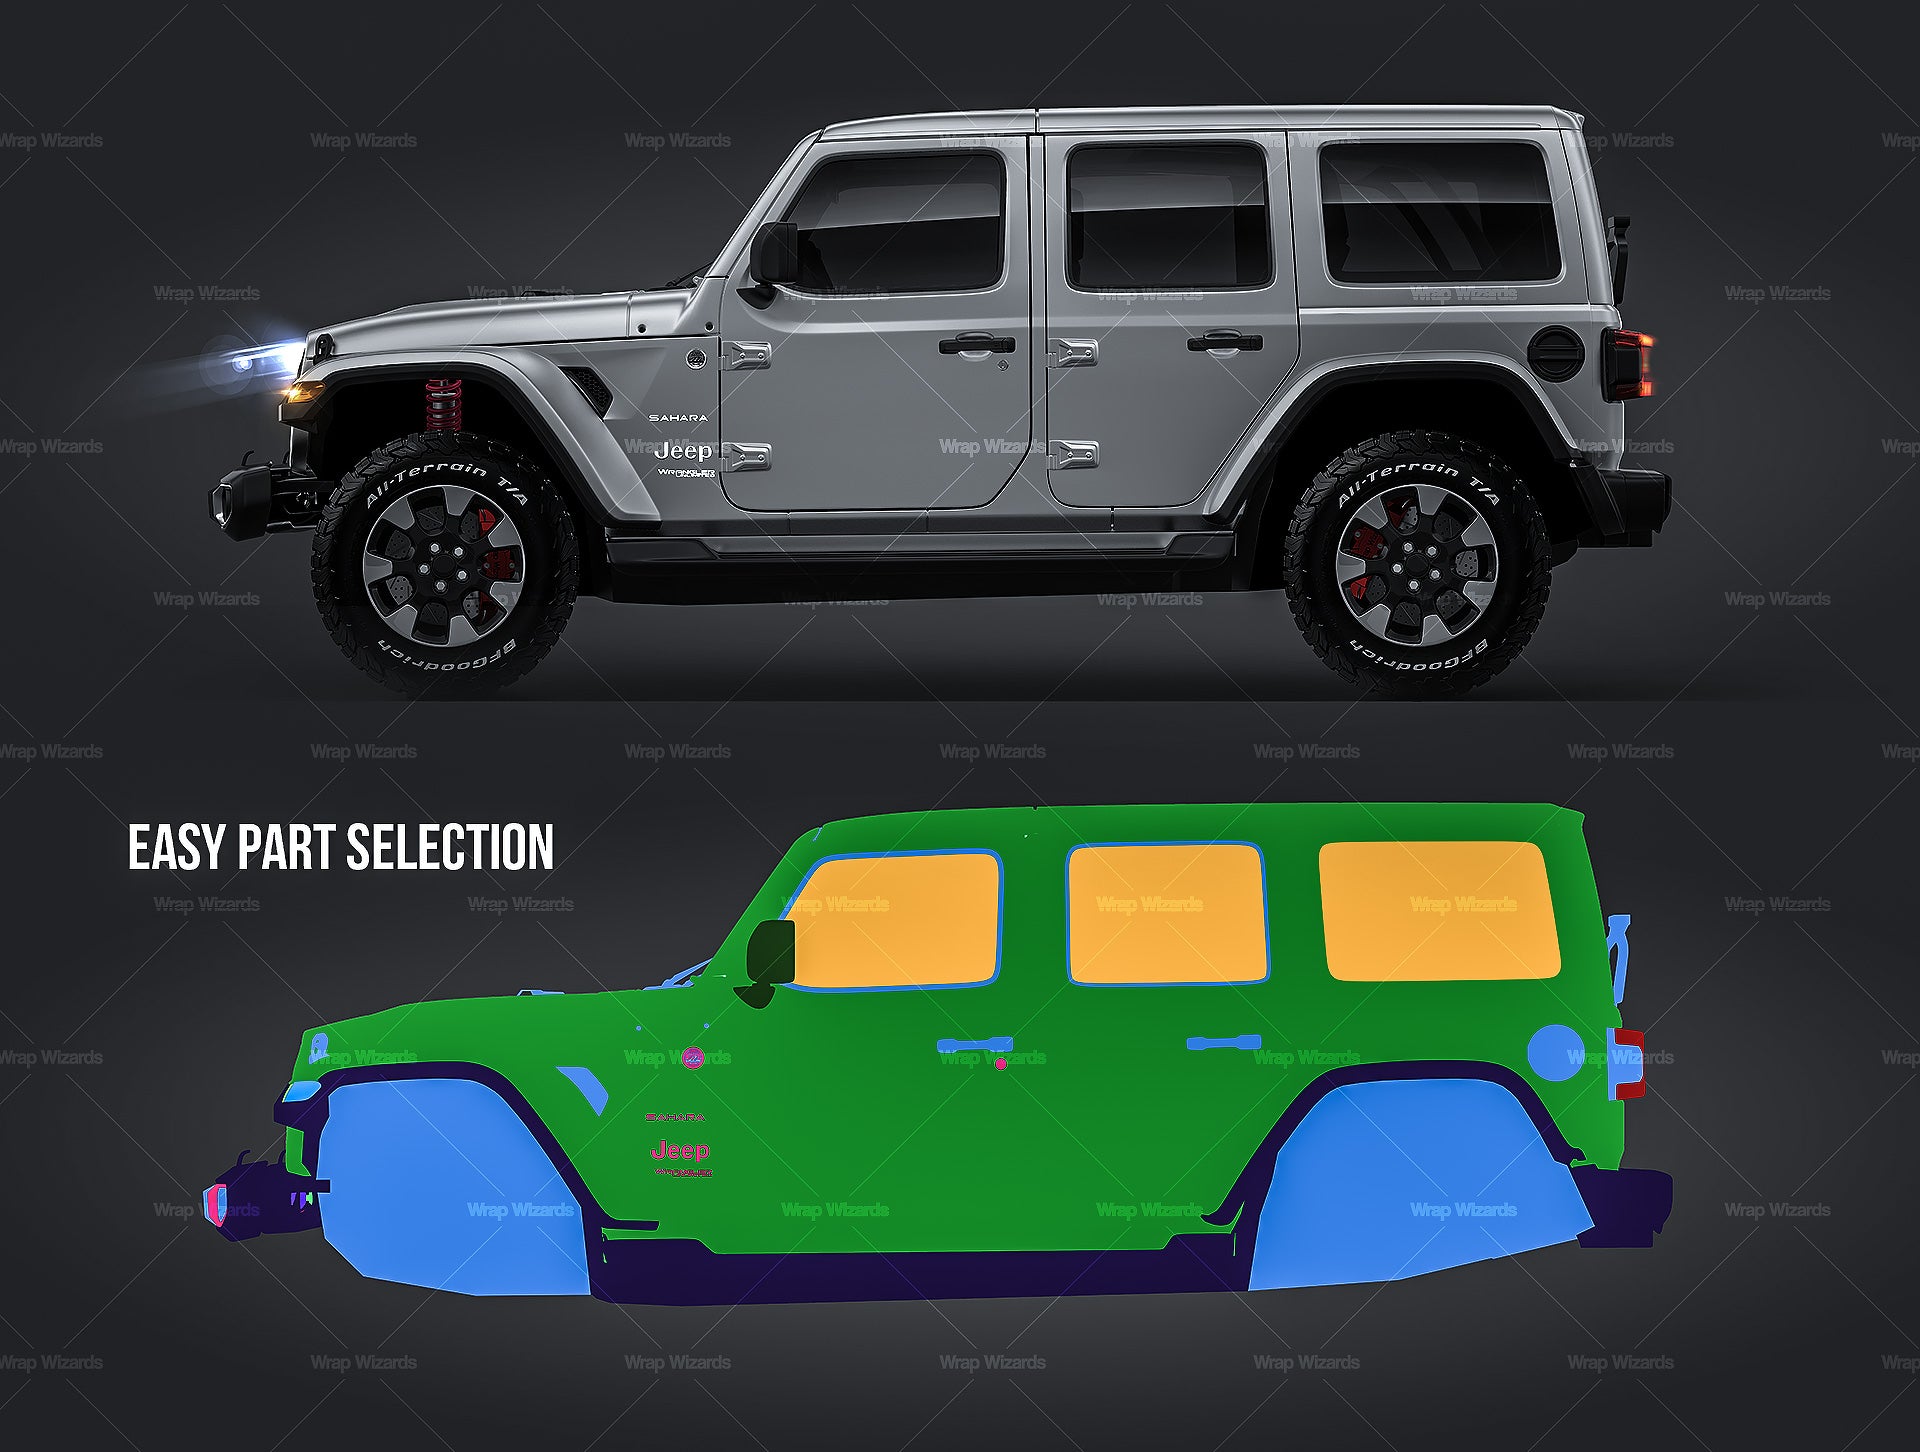 Jeep Wrangler Sahara Unlimited 2018 satin matt finish - all sides Car Mockup Template.psd